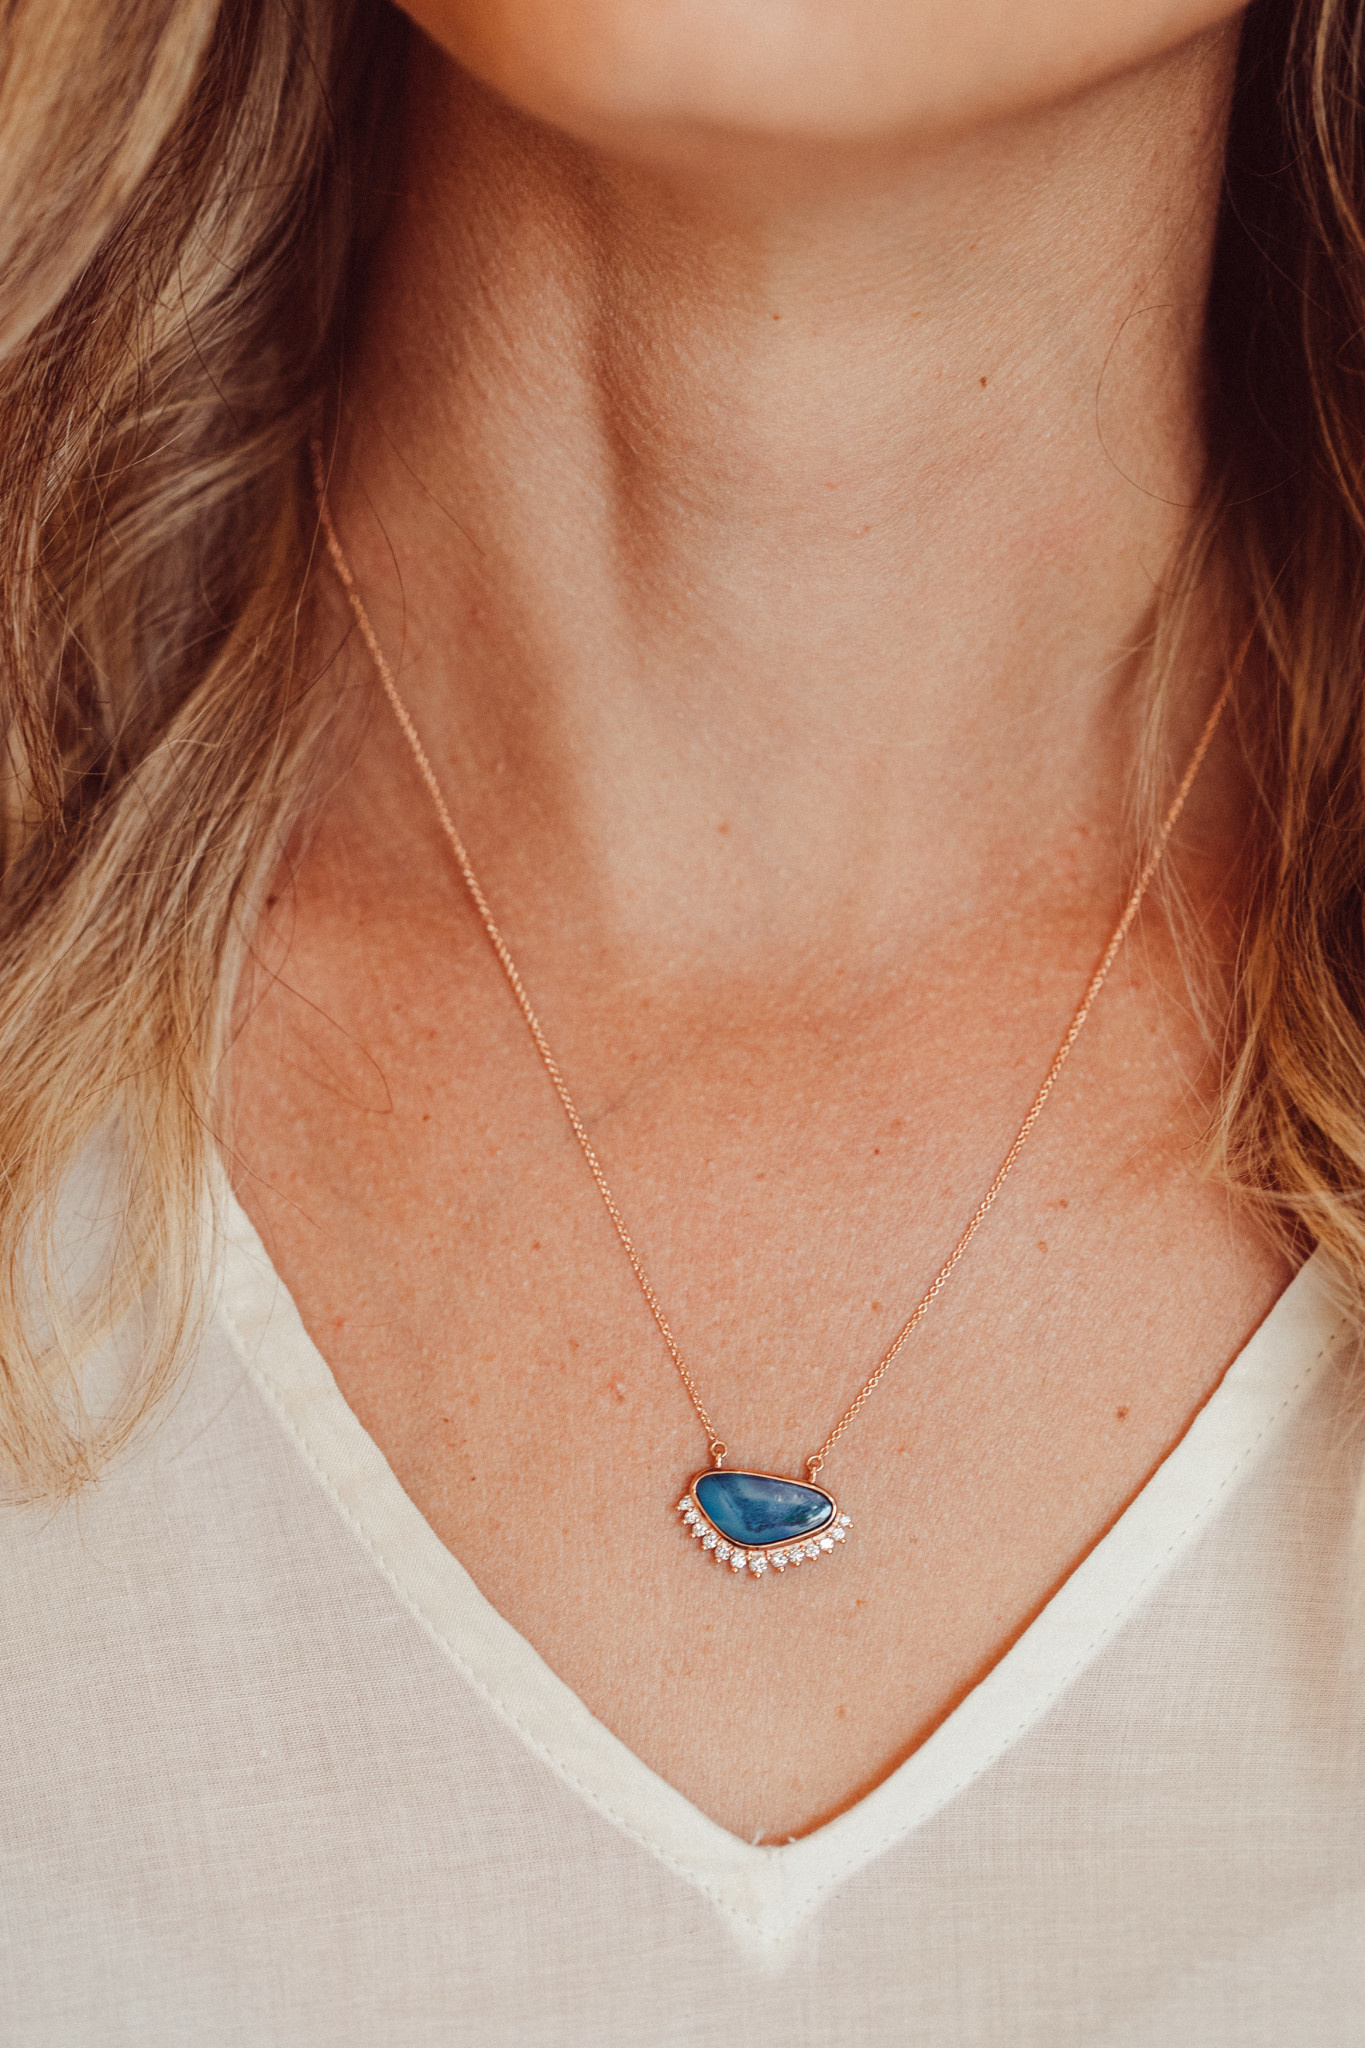 Blue-purple opal necklace, Diamond flare, 14k rose gold, Sarah O jewelry, 1370x2050 HD Handy